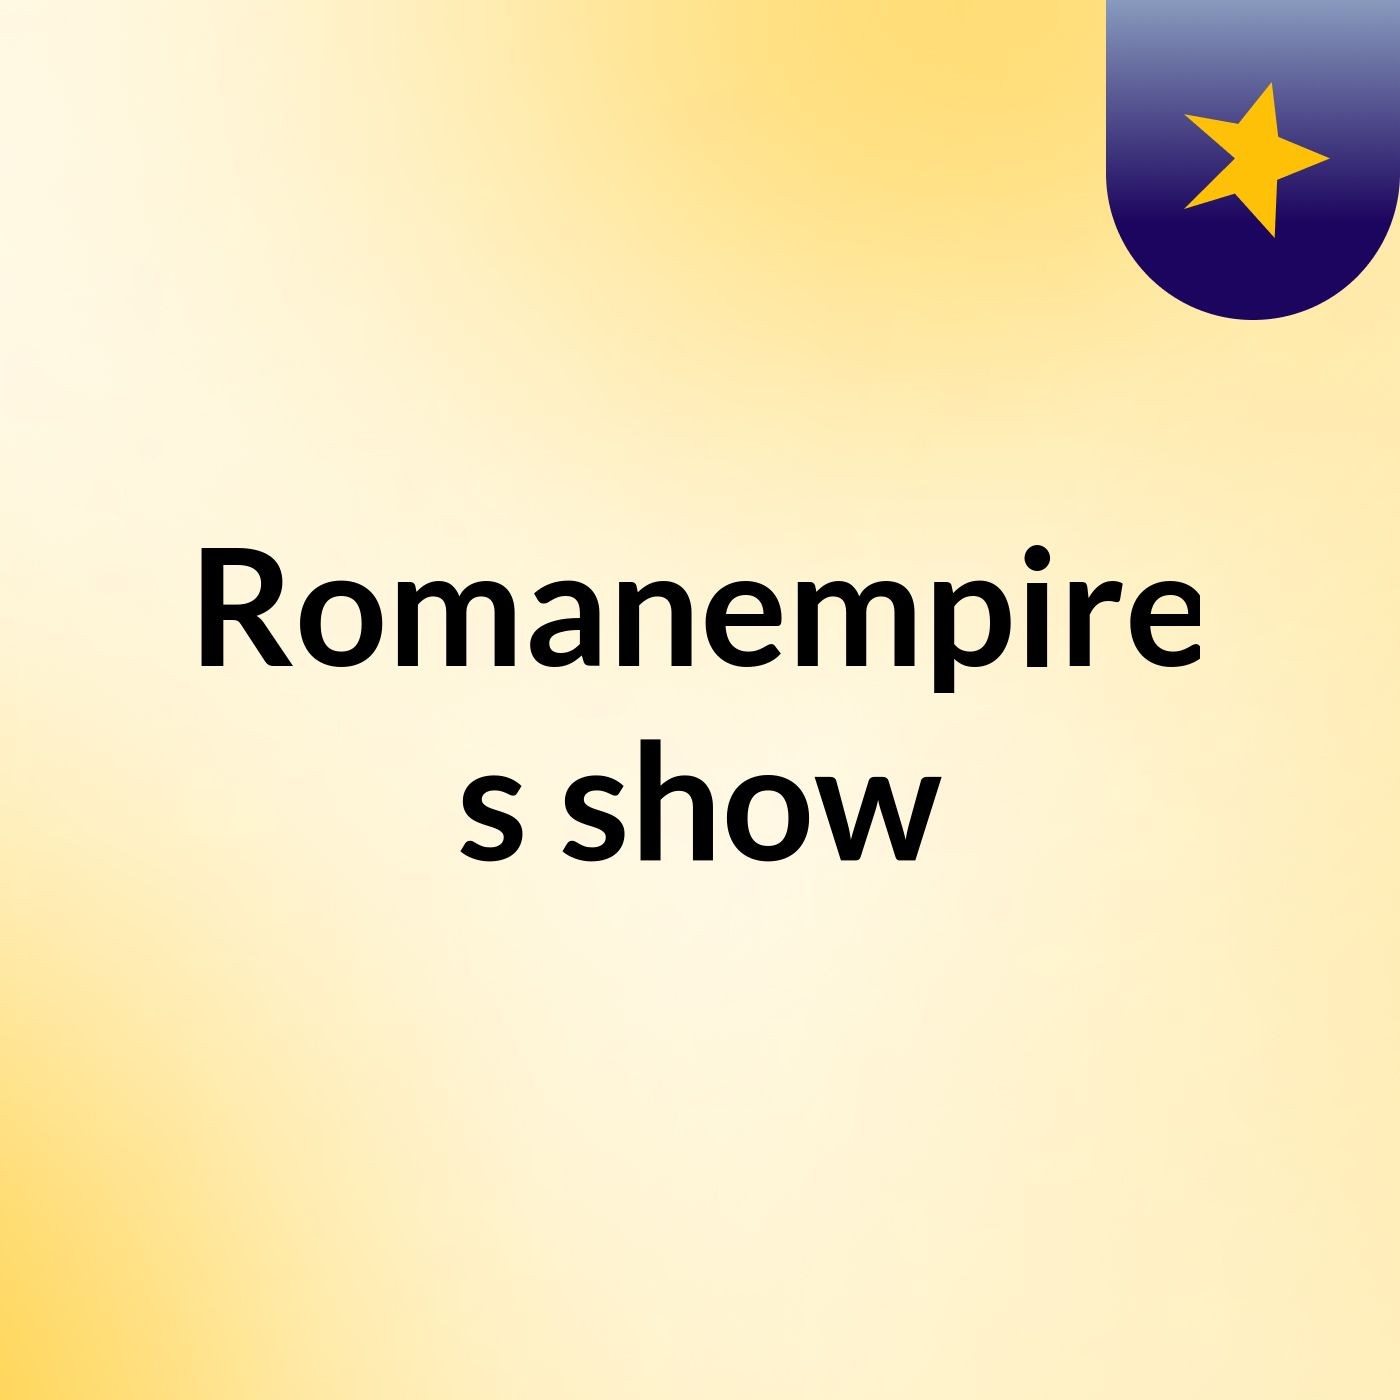 Romanempire's show